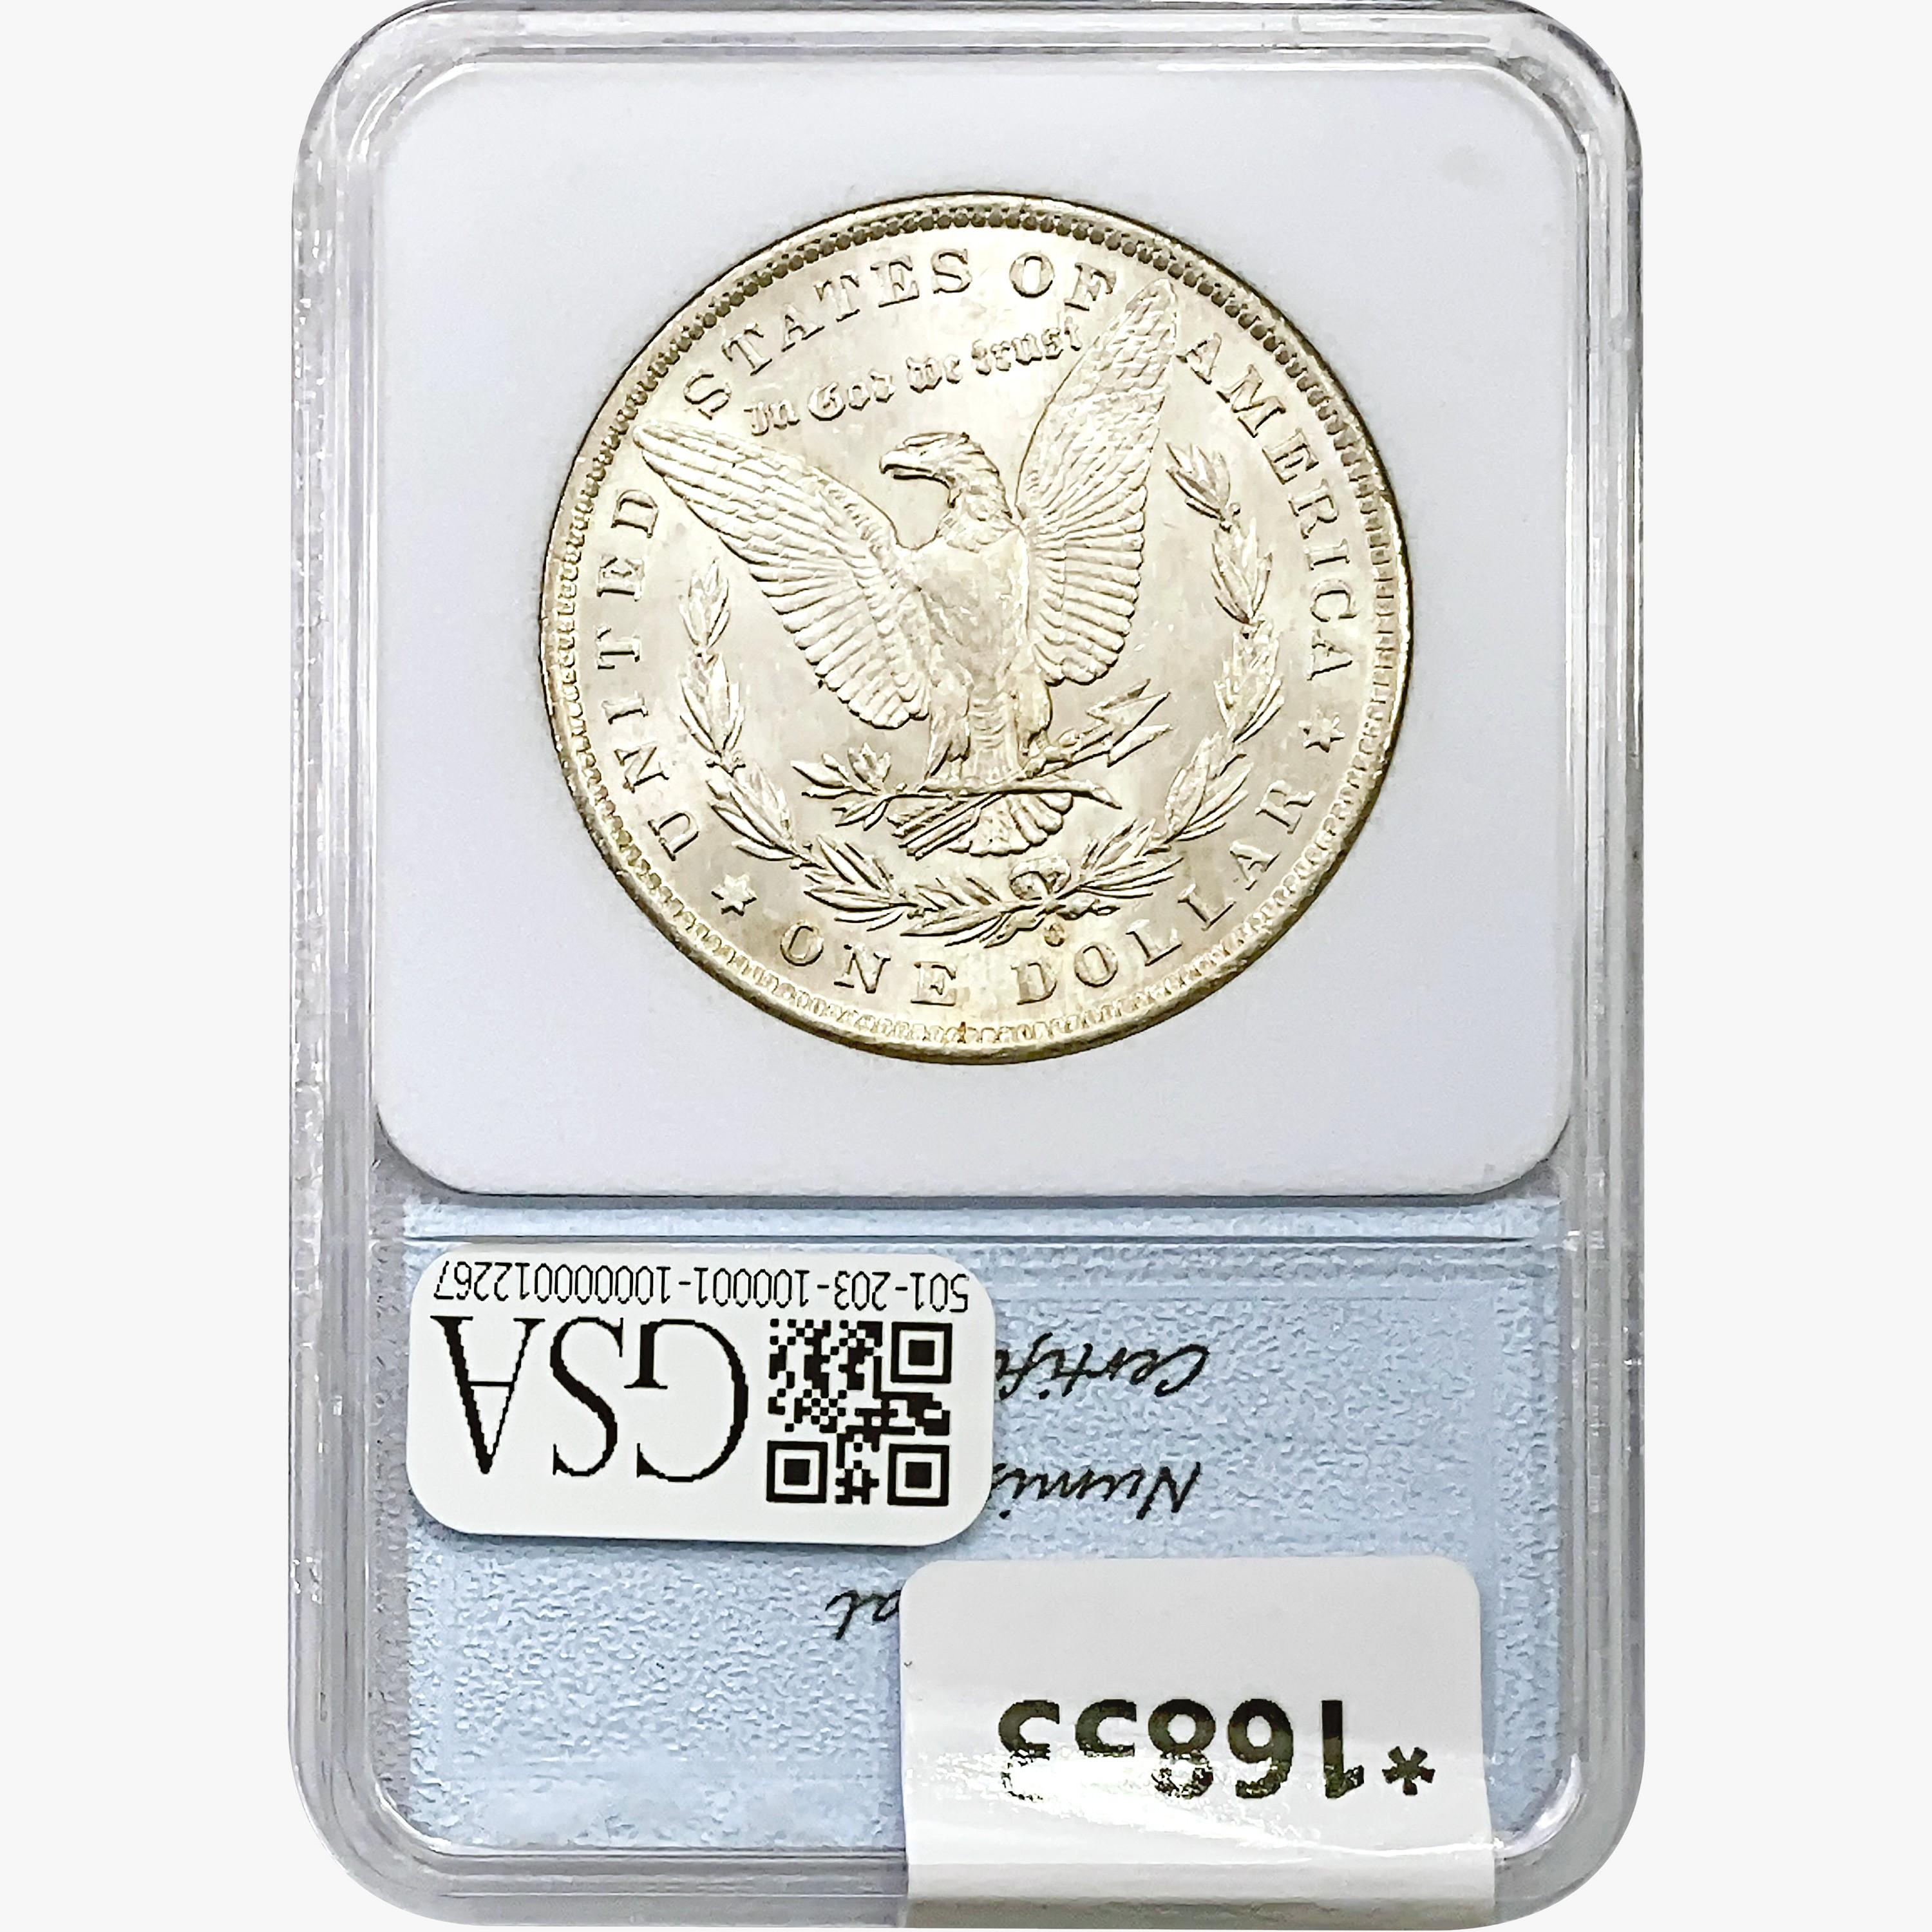 1884-O Morgan Silver Dollar NNC MS65